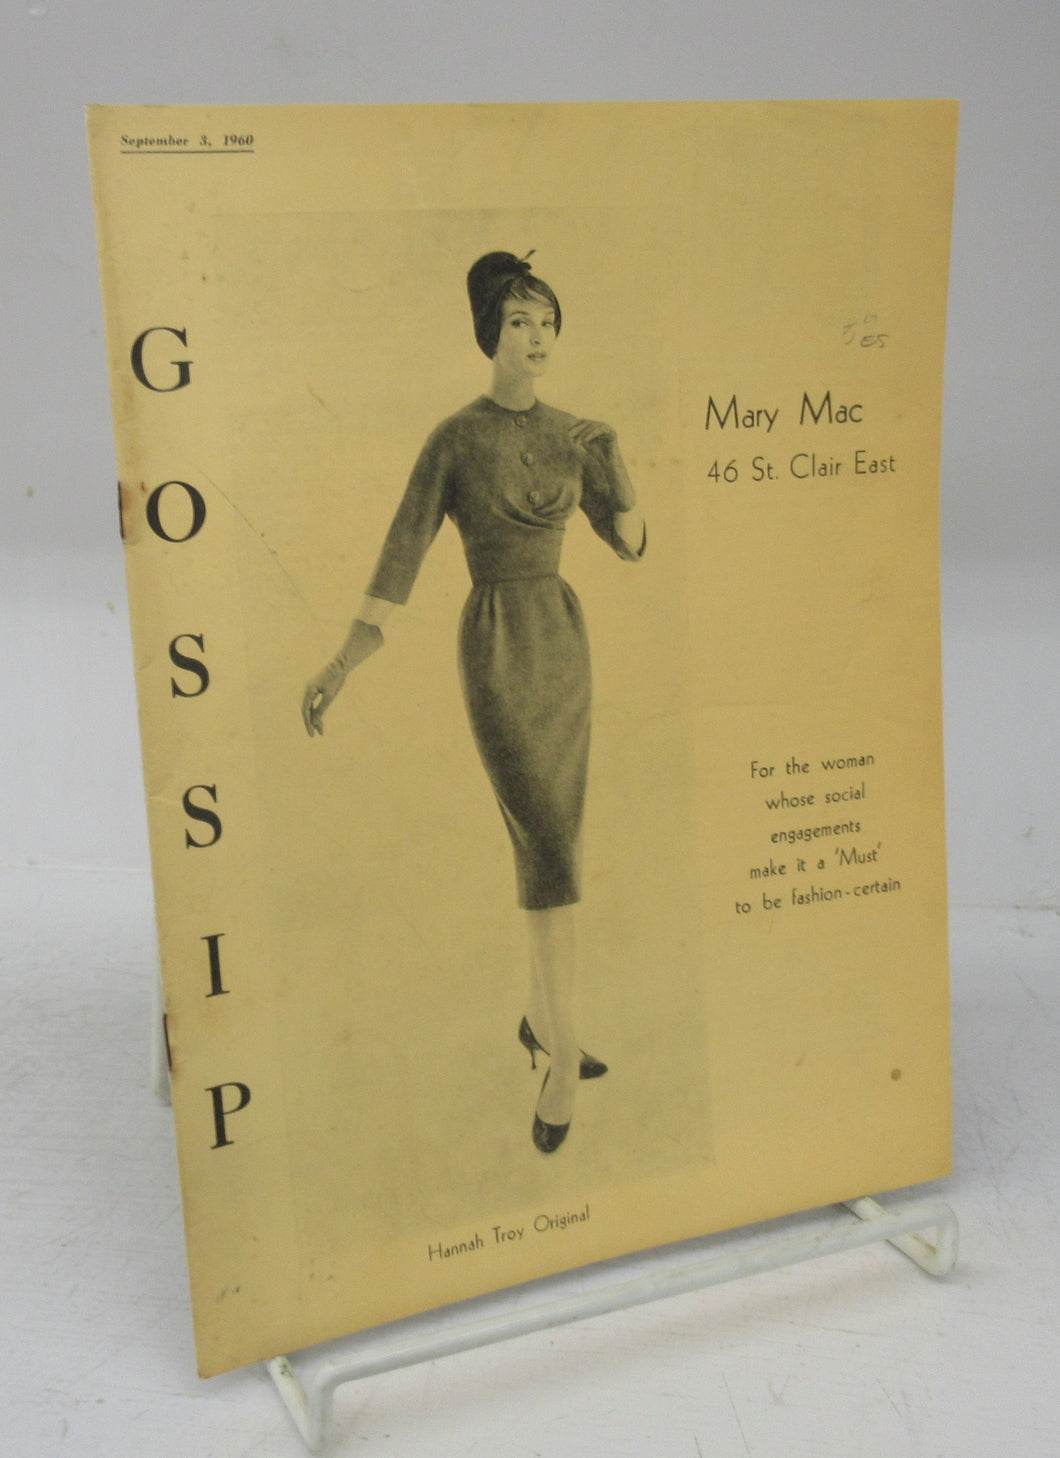 Gossip! September 3, 1960